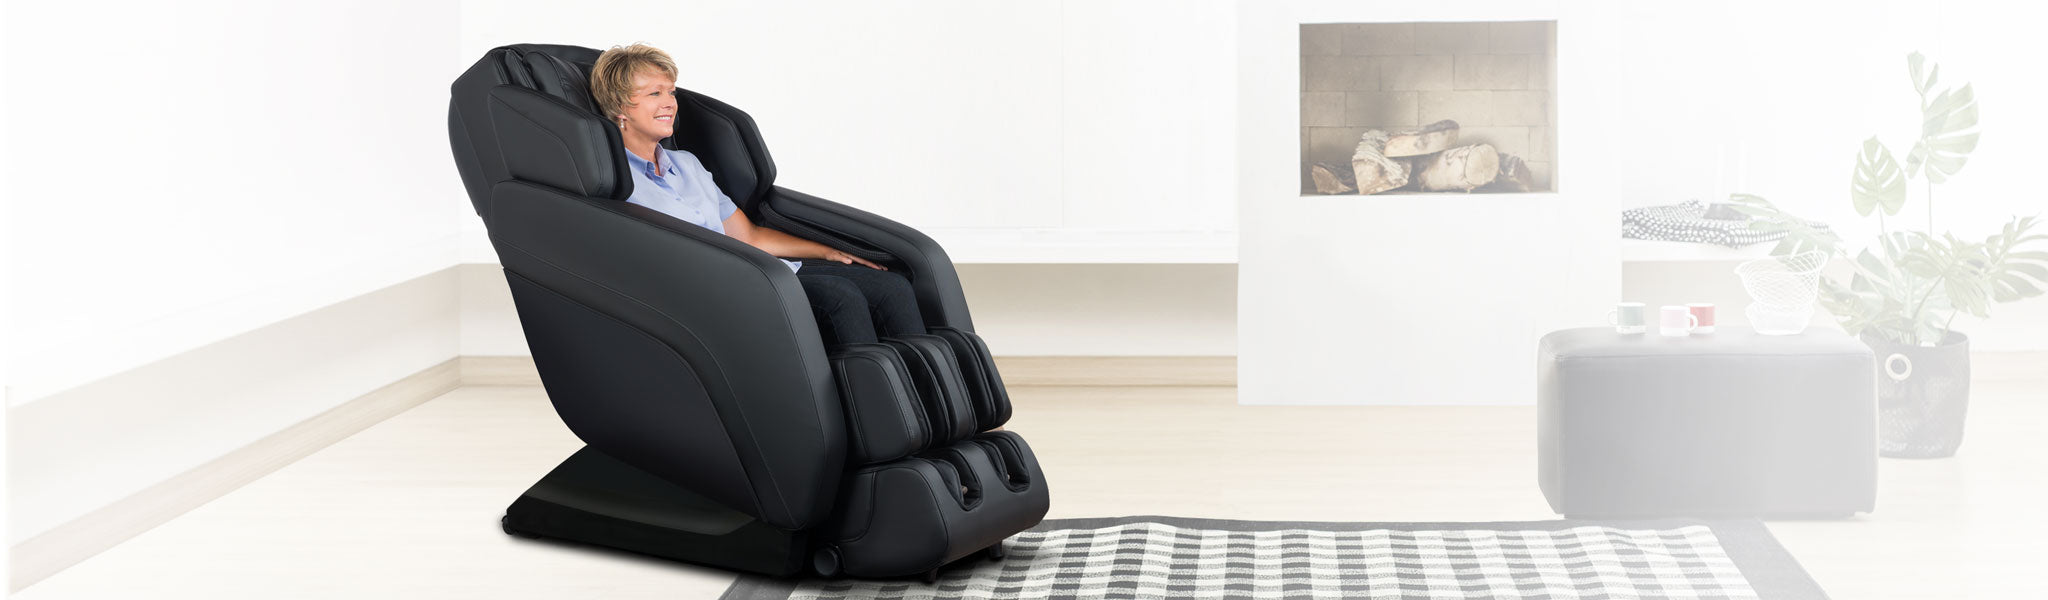 Relaxonchair MK-V Plus massage chair Black